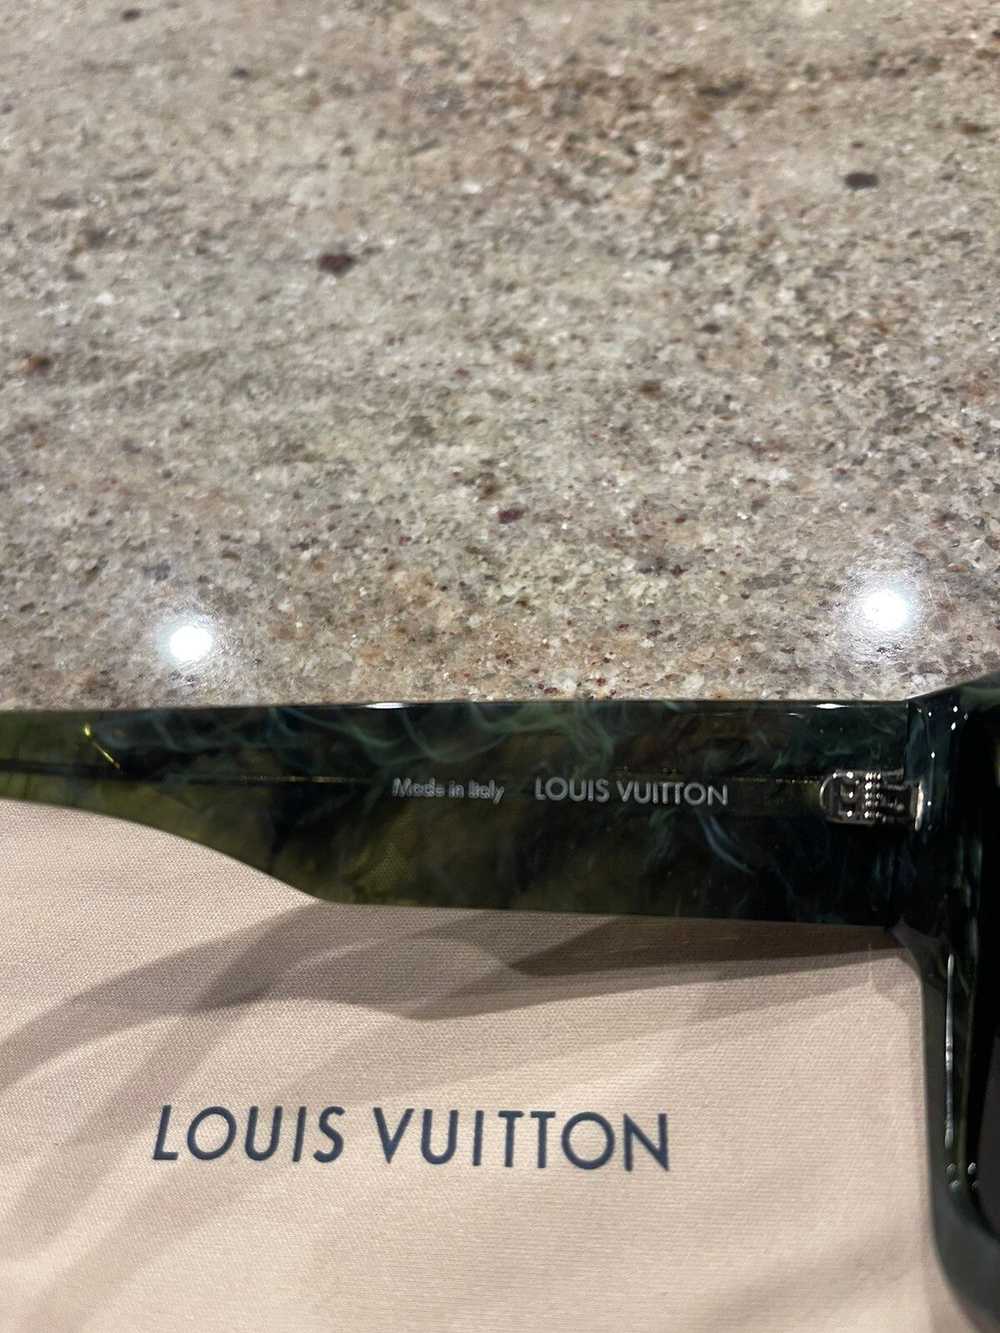 Louis Vuitton Louis Vuitton cyclone - image 5